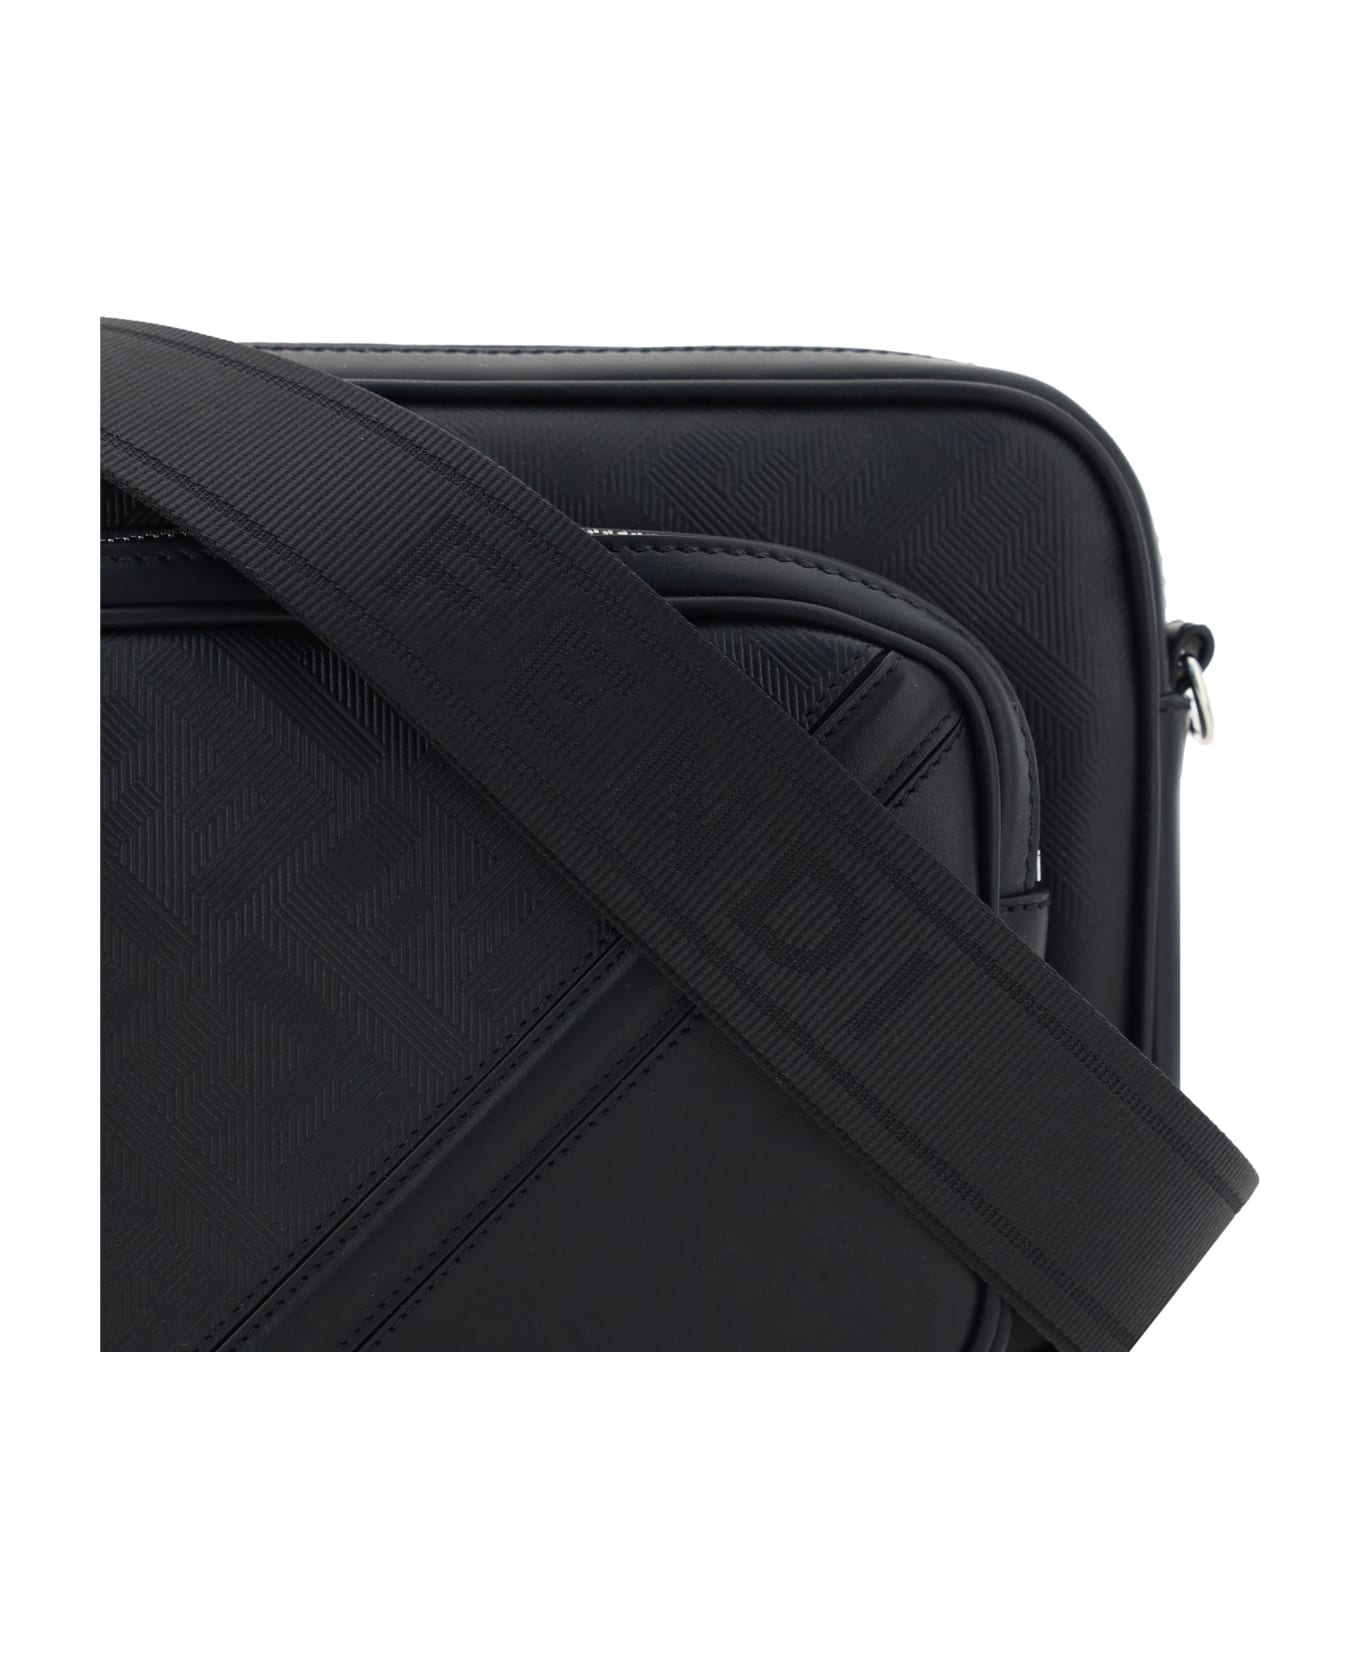 Fendi Camera Case Shoulder Bag - Black ショルダーバッグ